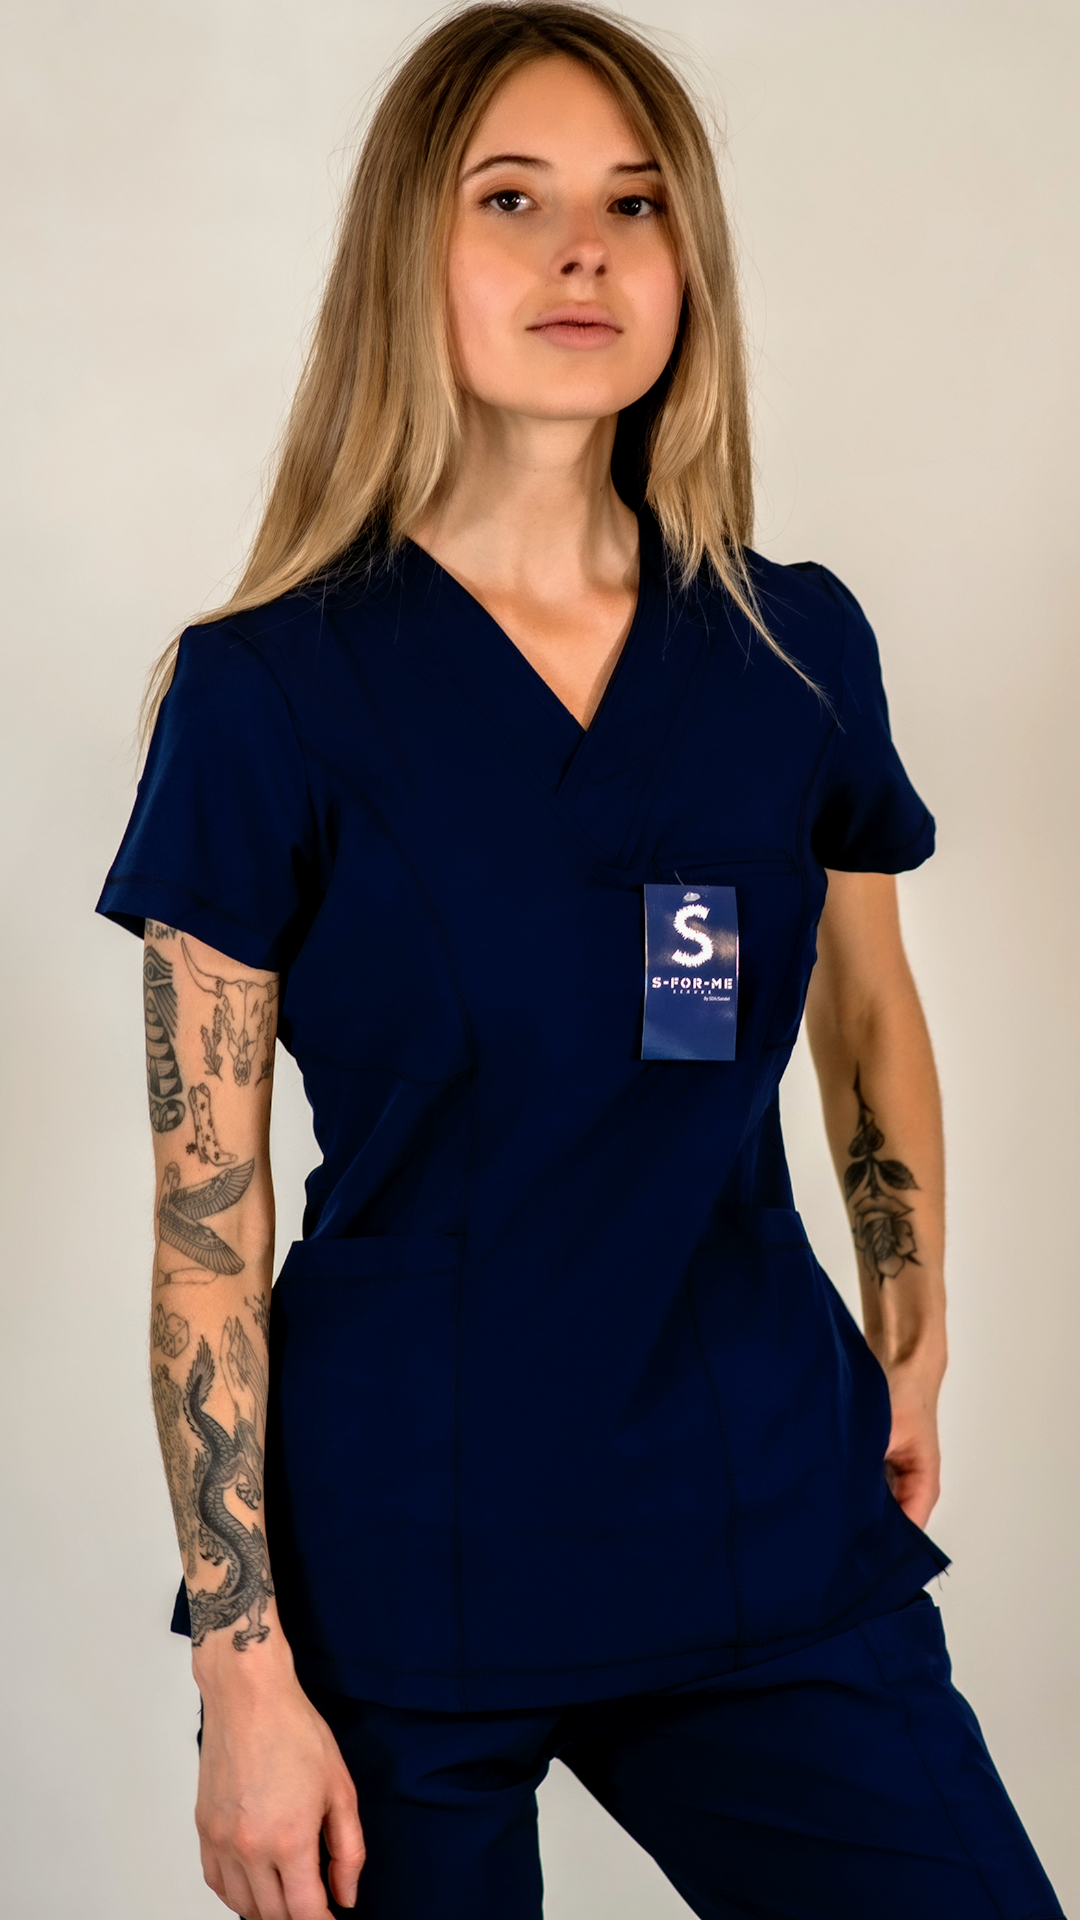 uniformes de enfermeras modernos